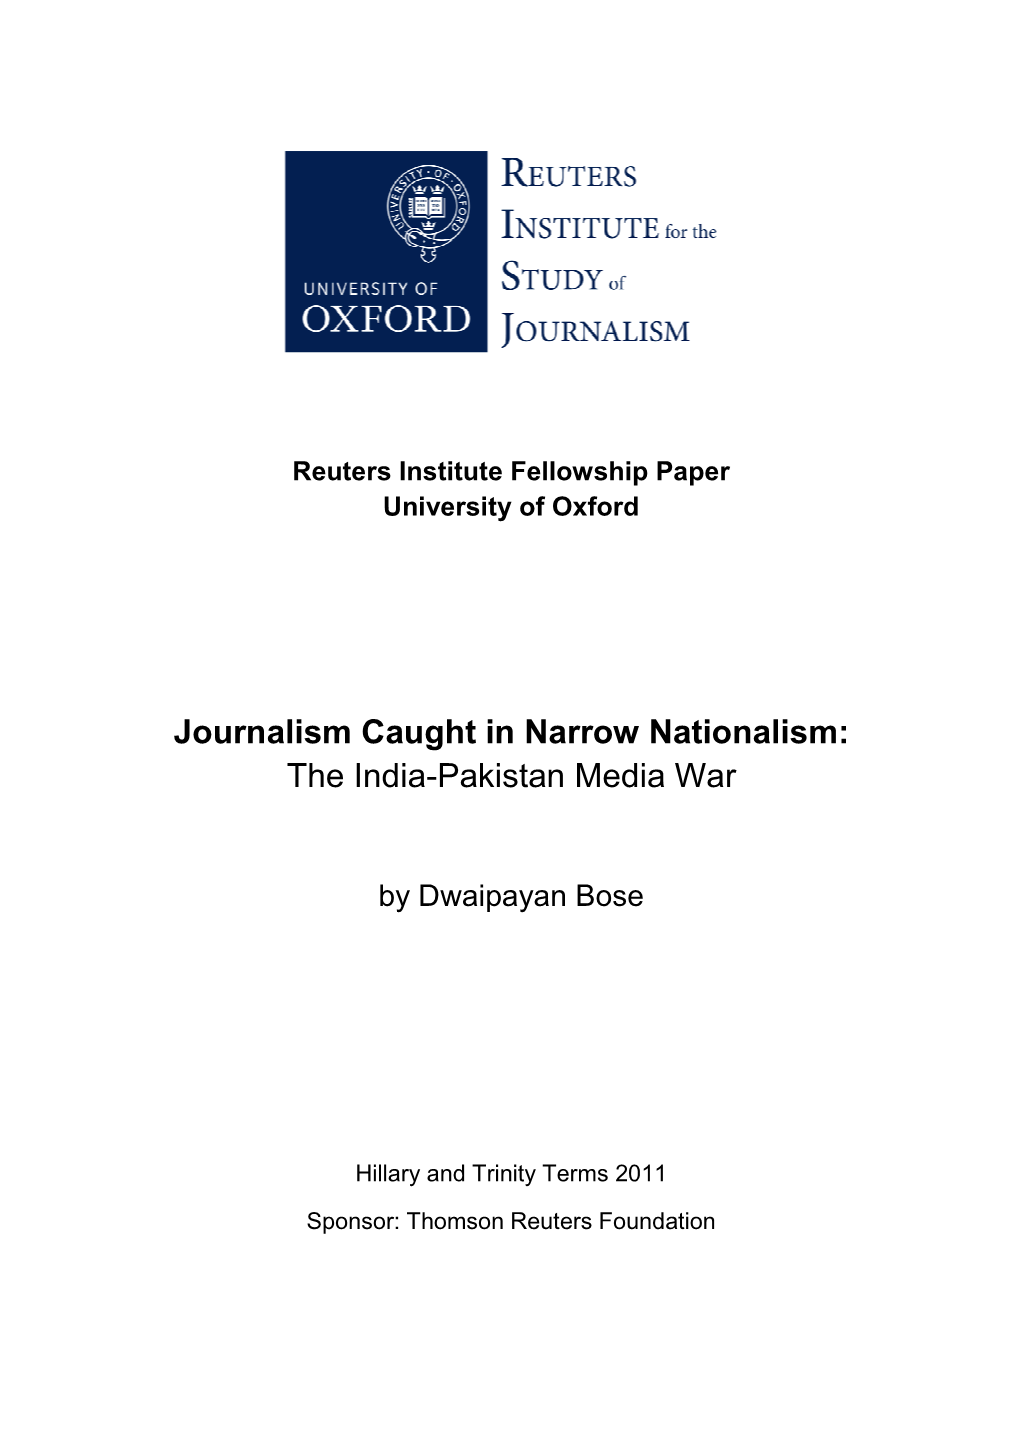 Journalism Caught in Narrow Nationalism: the India-Pakistan Media War